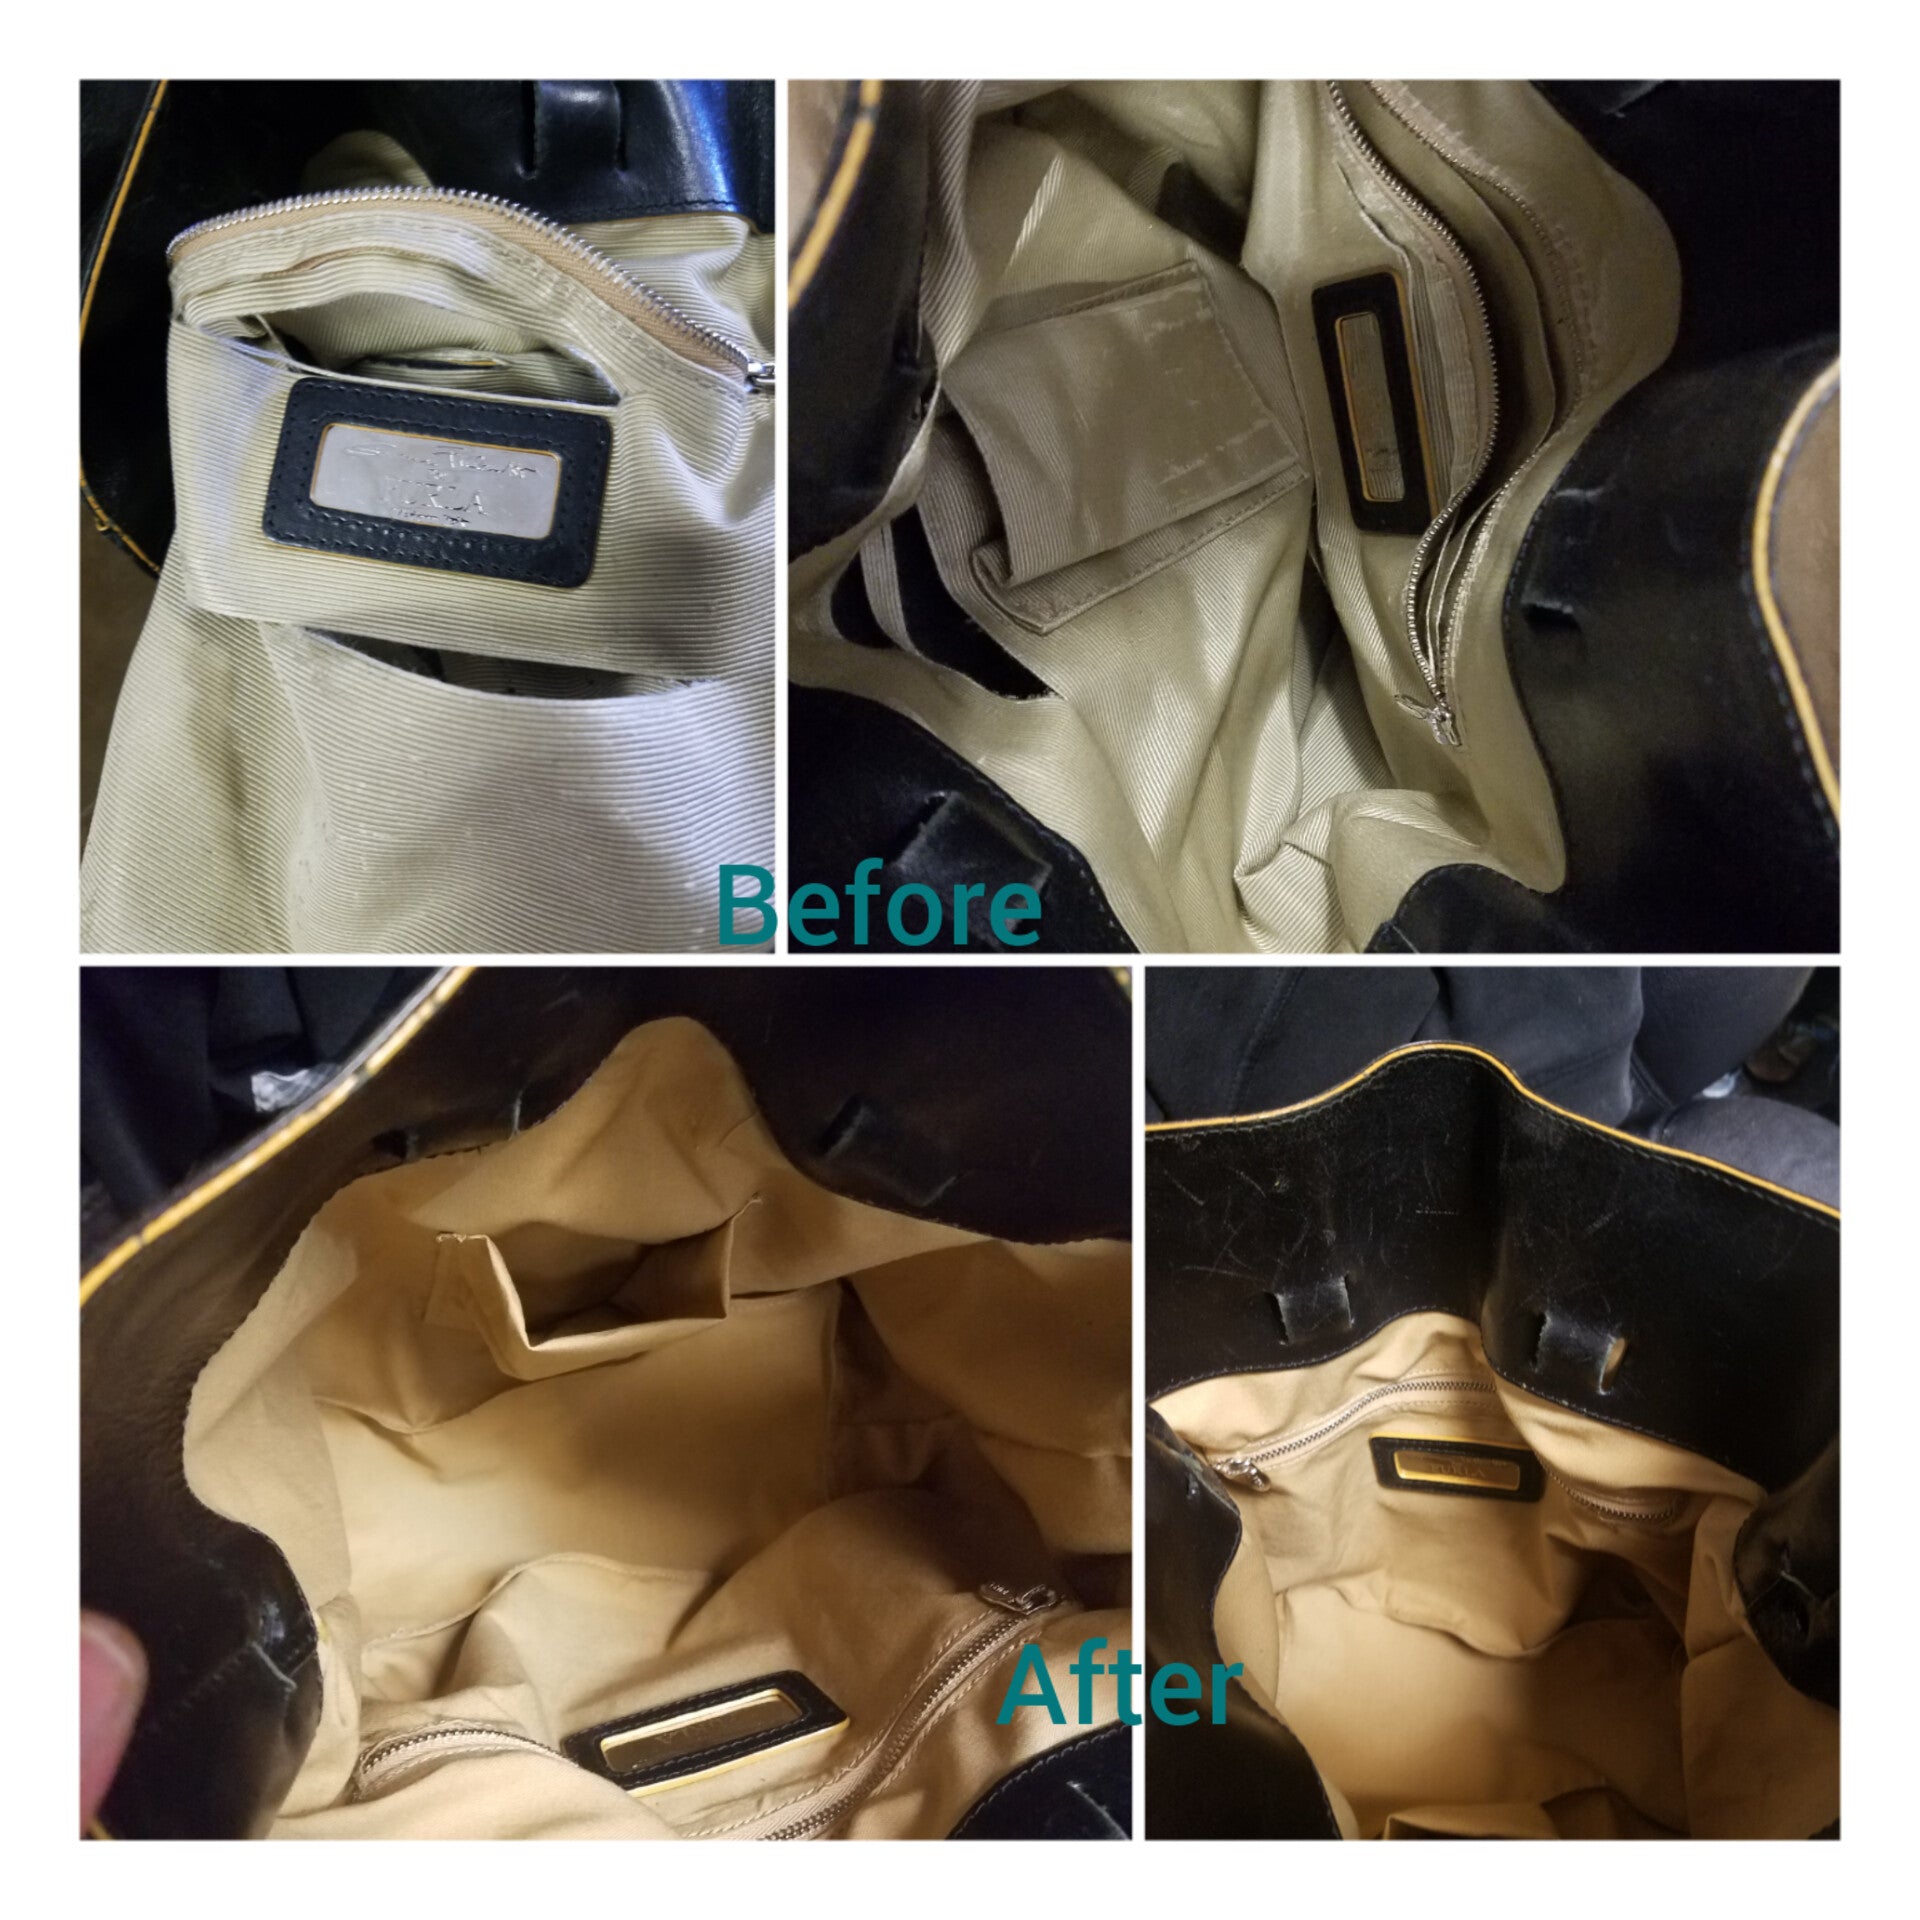 Louis Vuitton Handbag Repair - Replacing the lining on a Louis